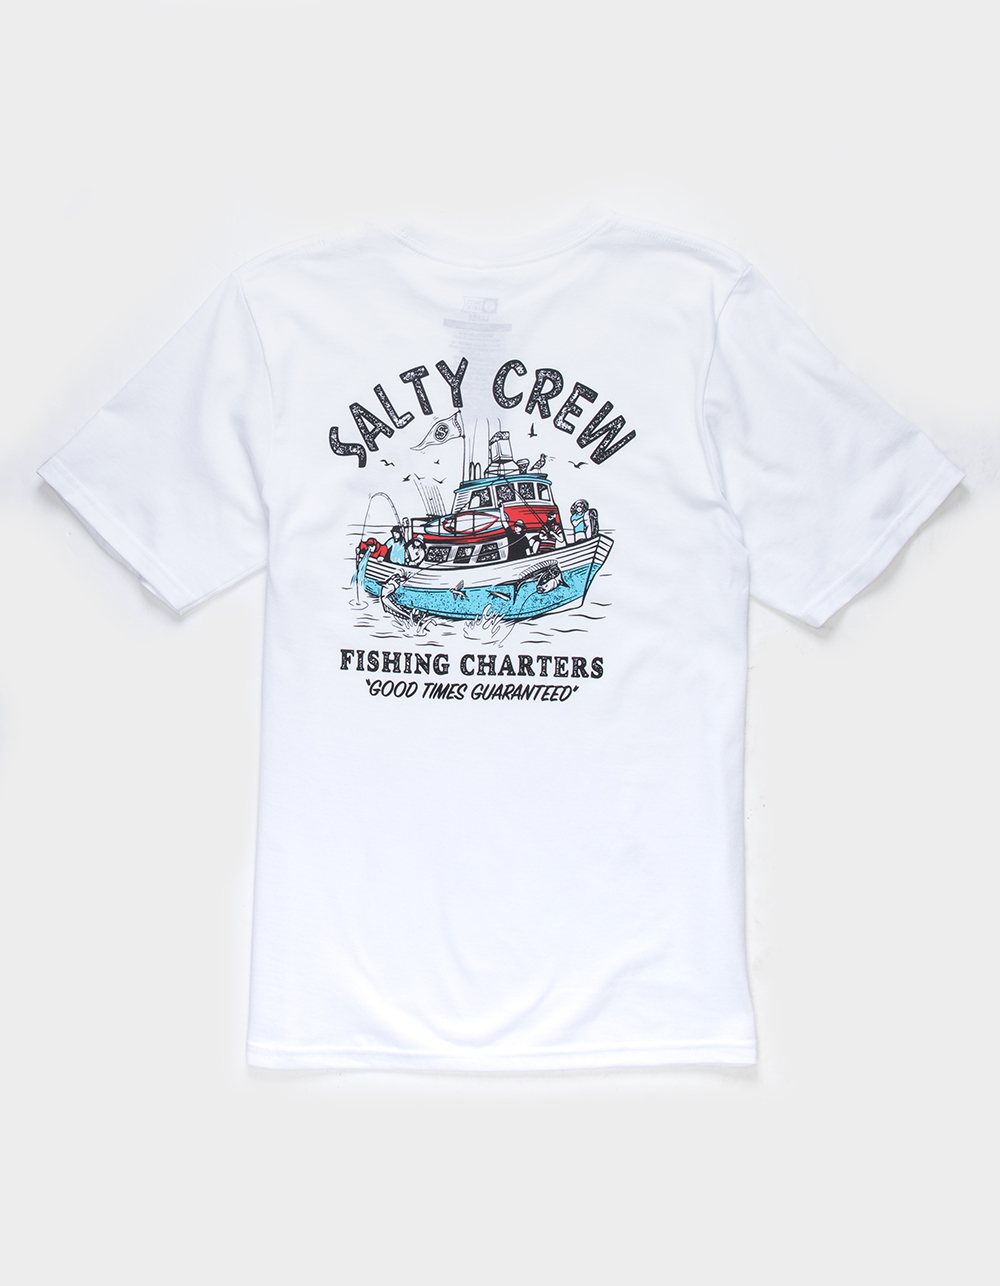 SALTY CREW Fishing Charters Boys Tee - WHITE